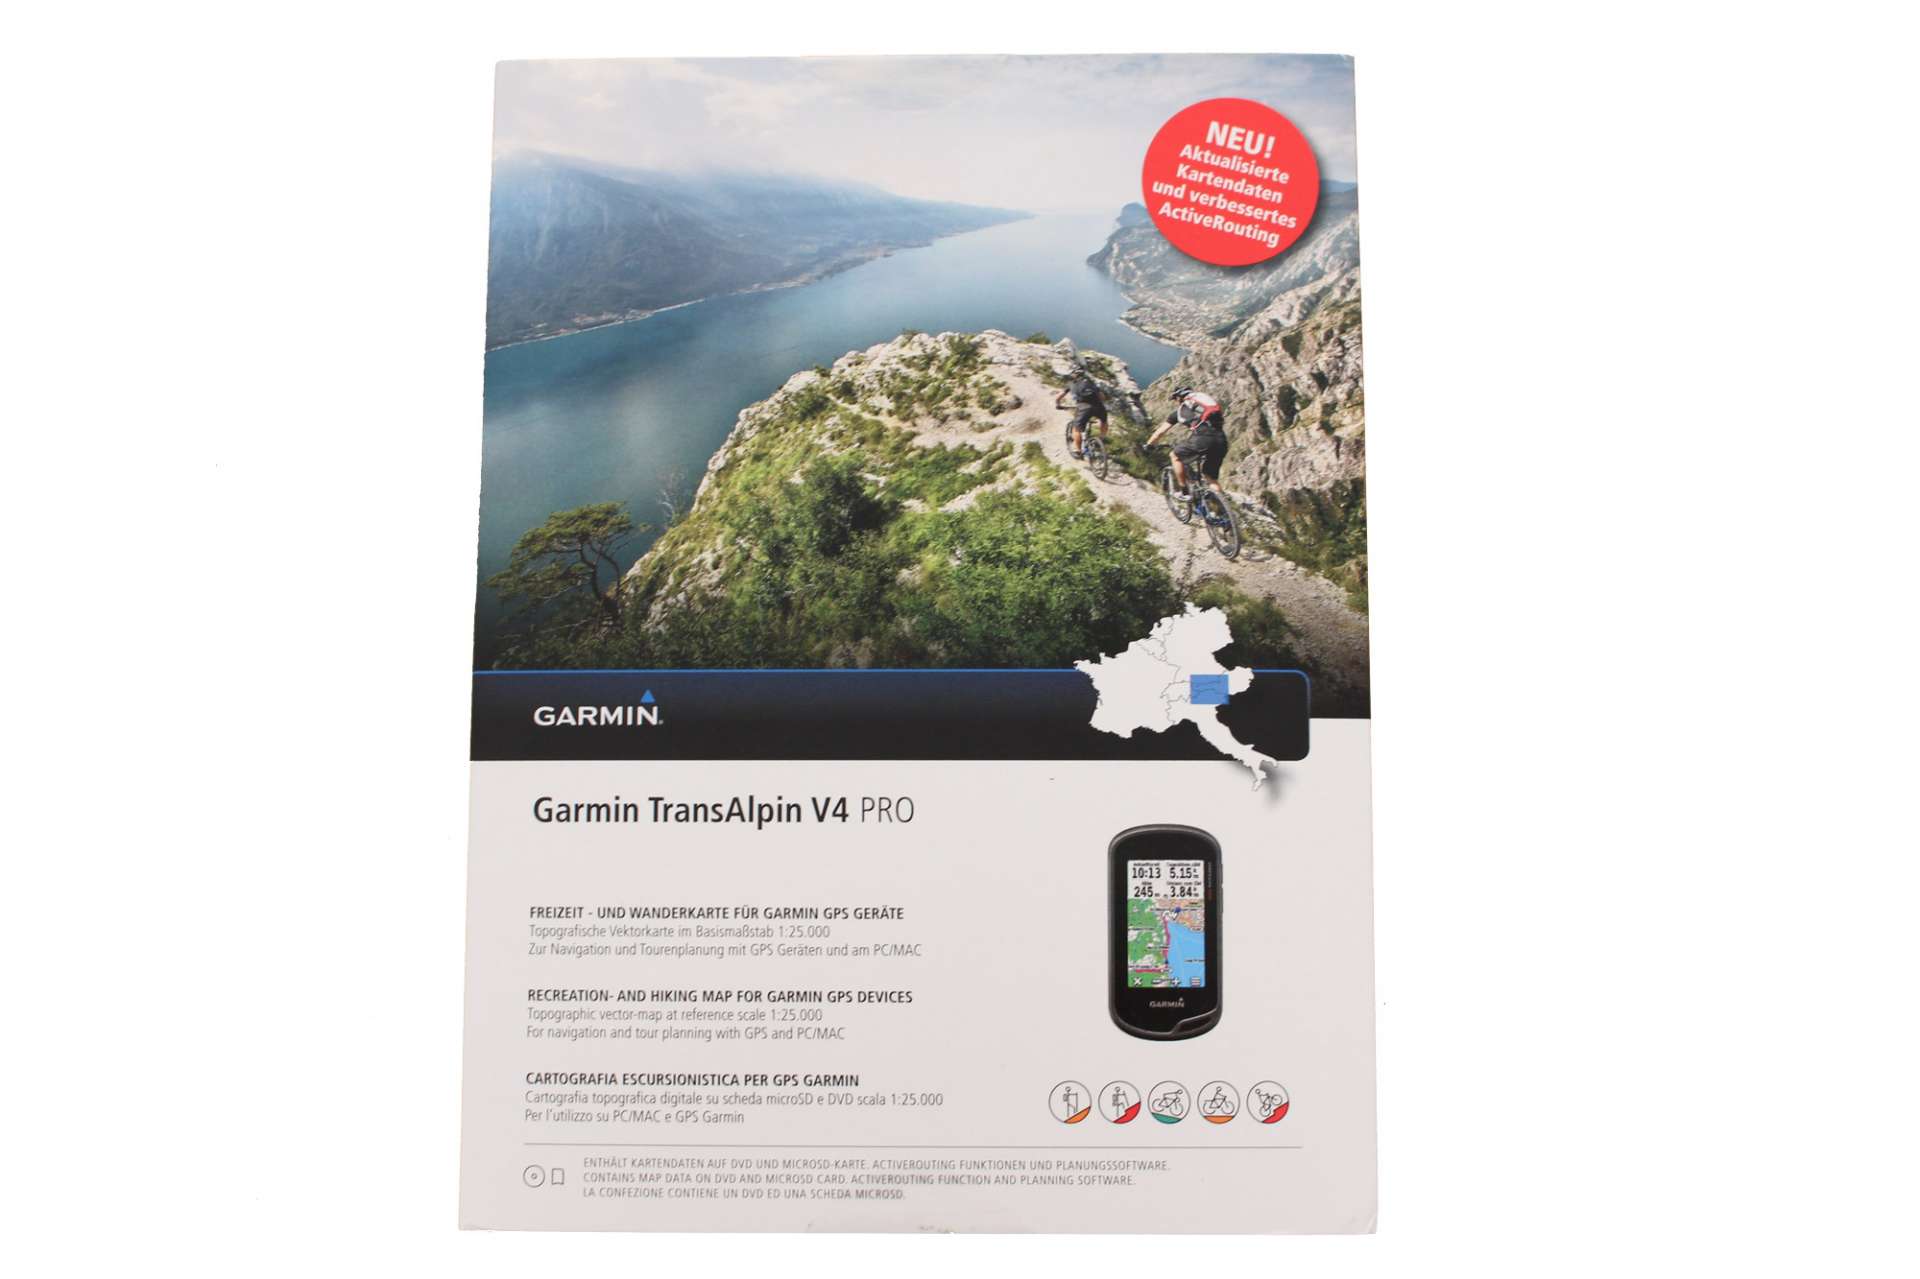 Garmin TransAlpine V4 Pro DVD & microSD